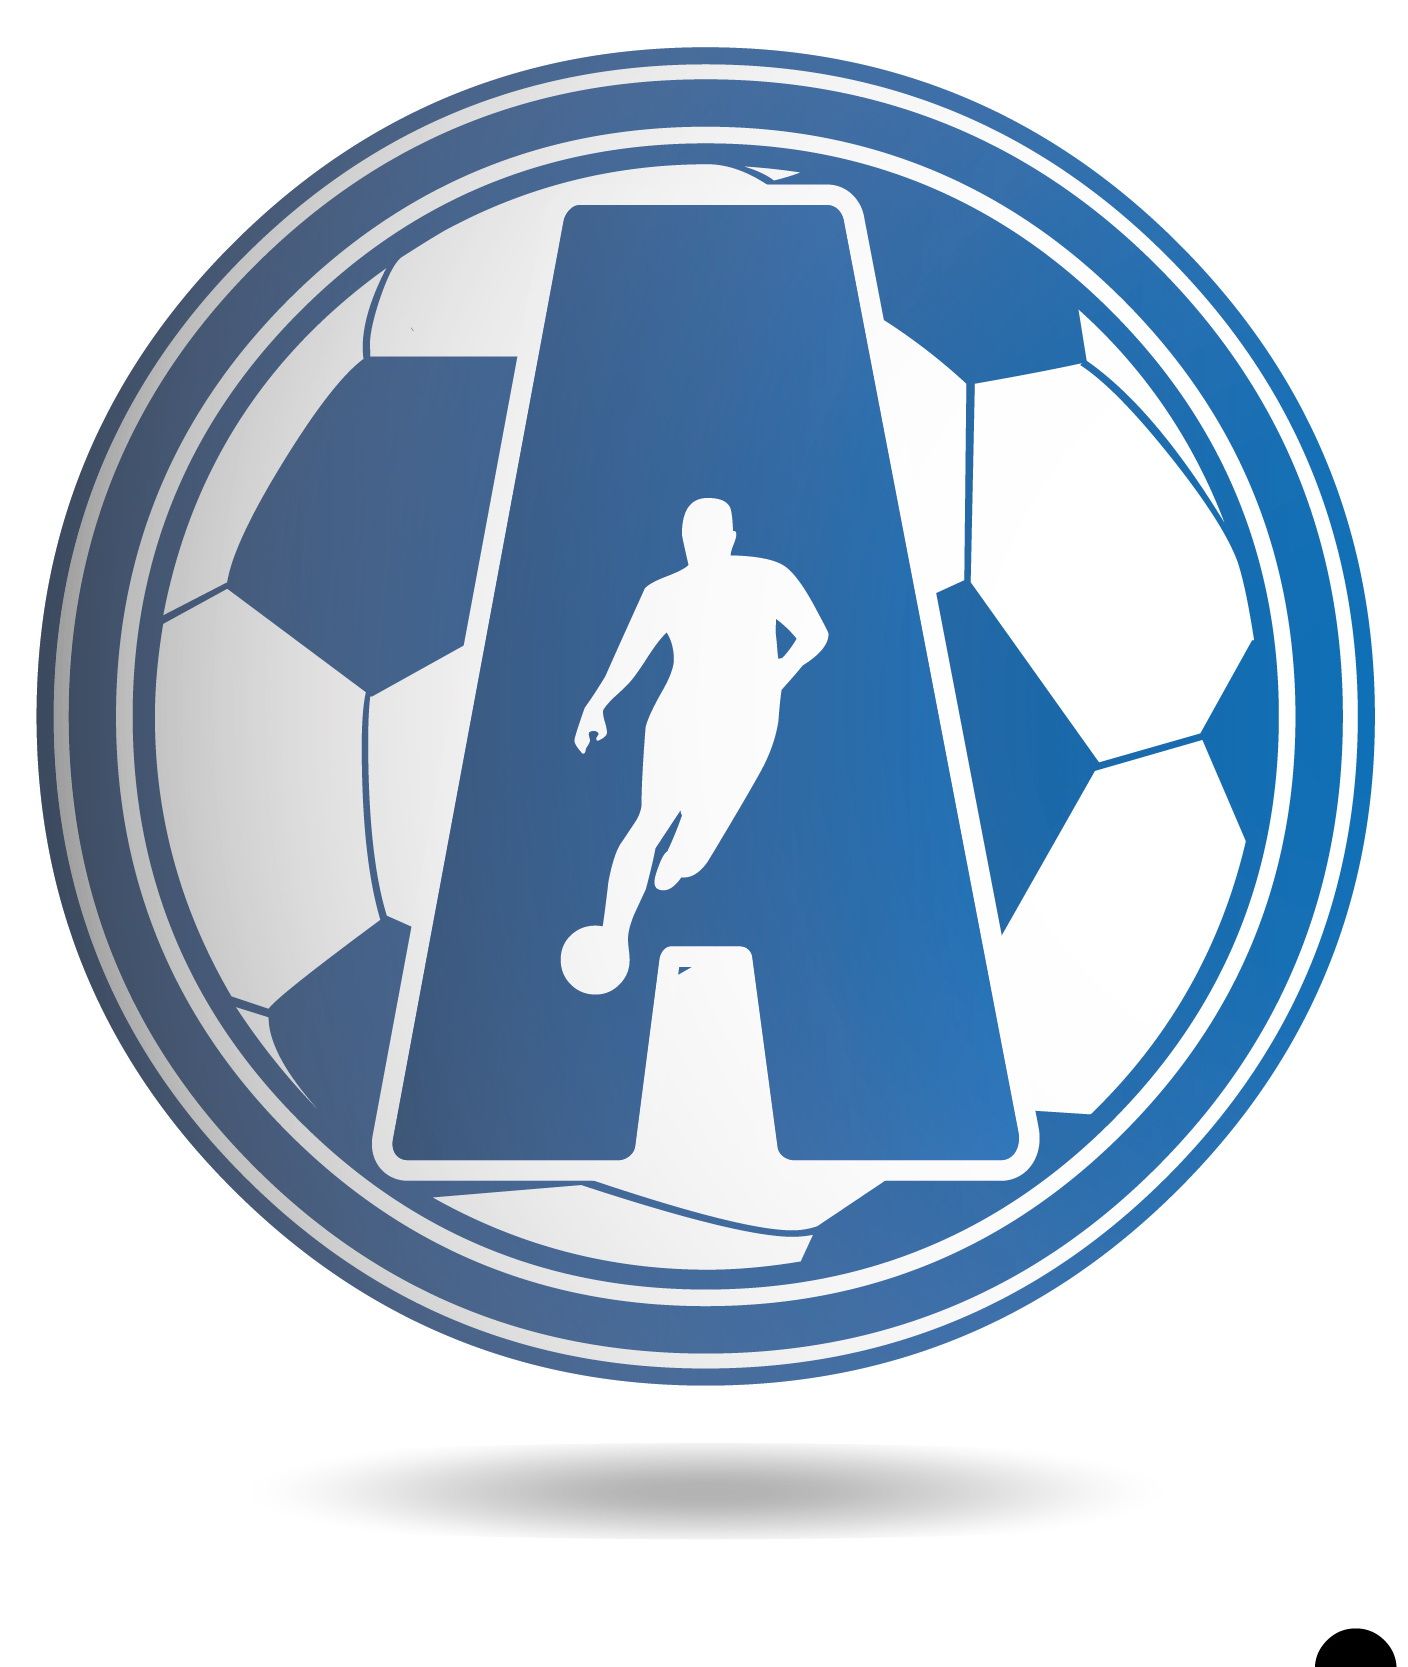 Логотип для Футбольного клуба  - дизайнер tnikandrov